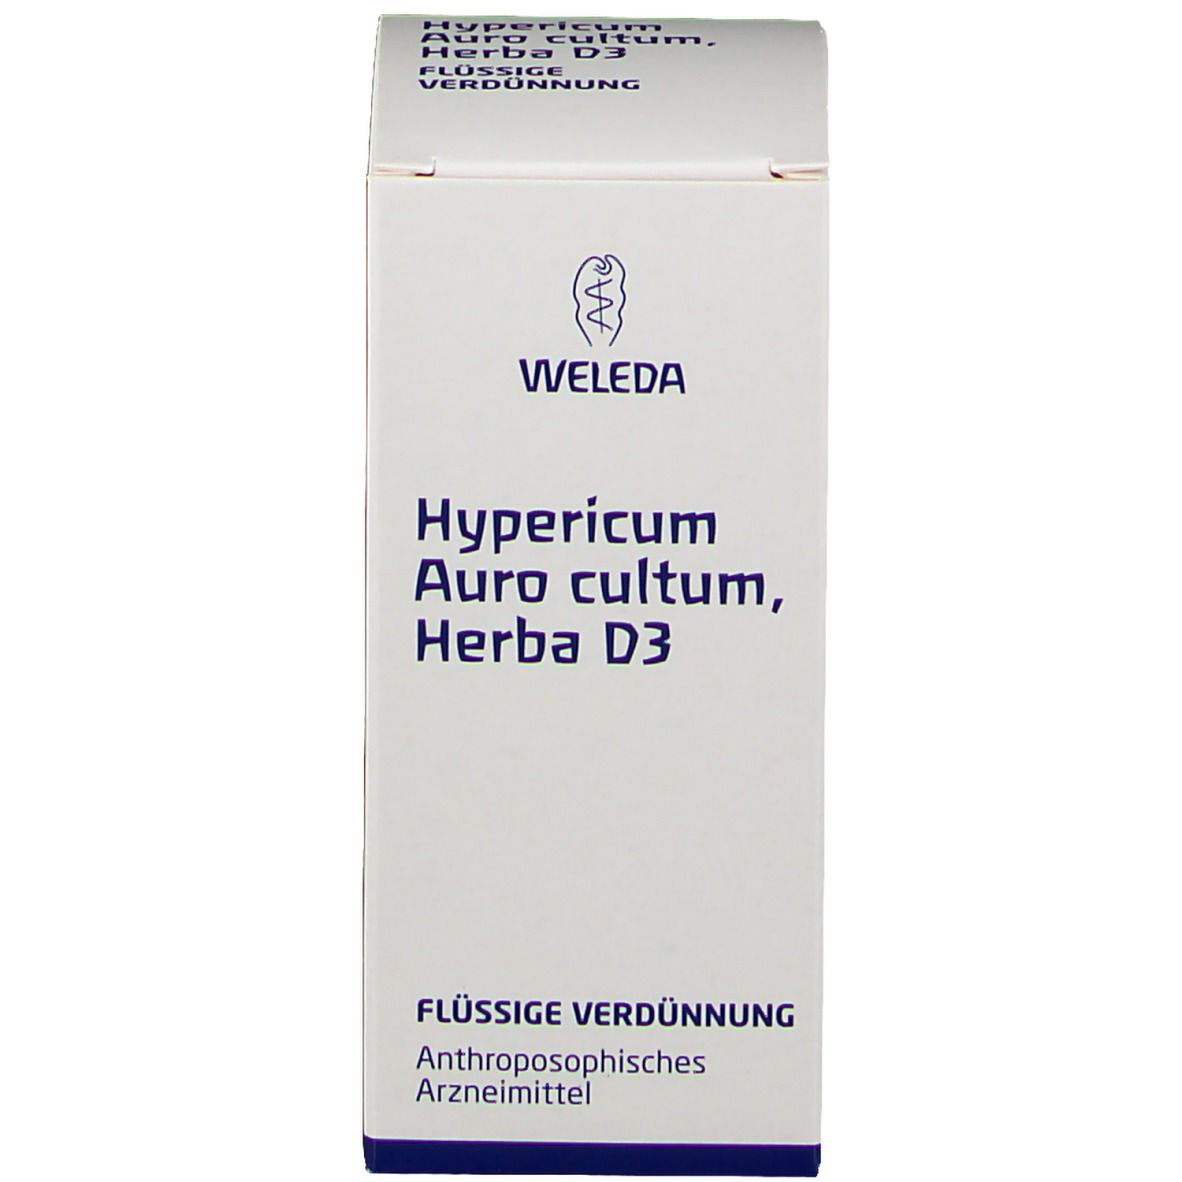 Hypericum Auro cultum Herba D3